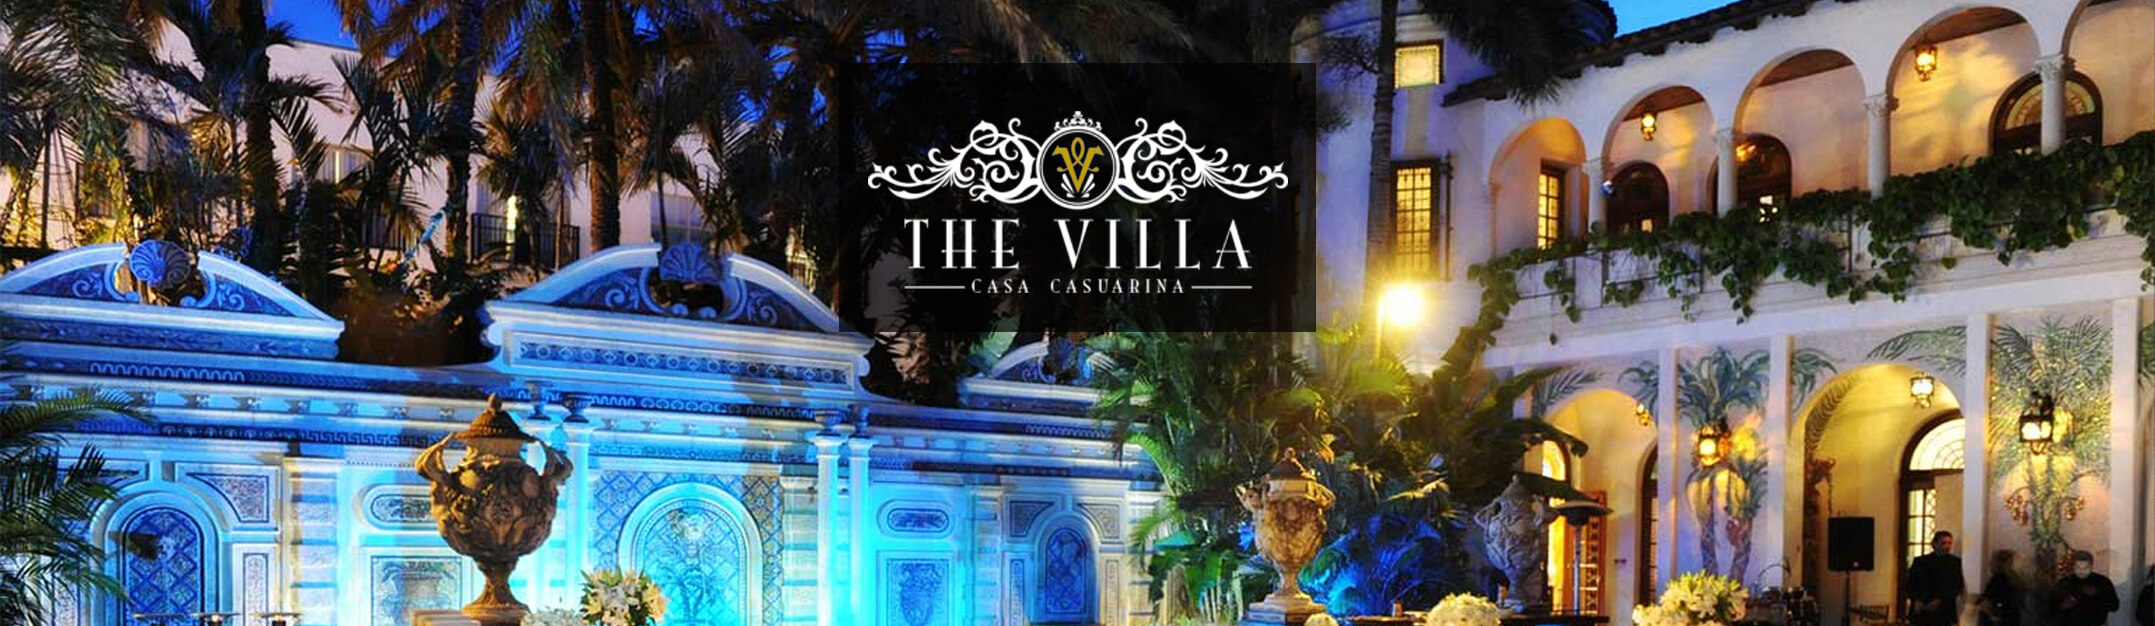 The Villa Casa Casuarina Hotel